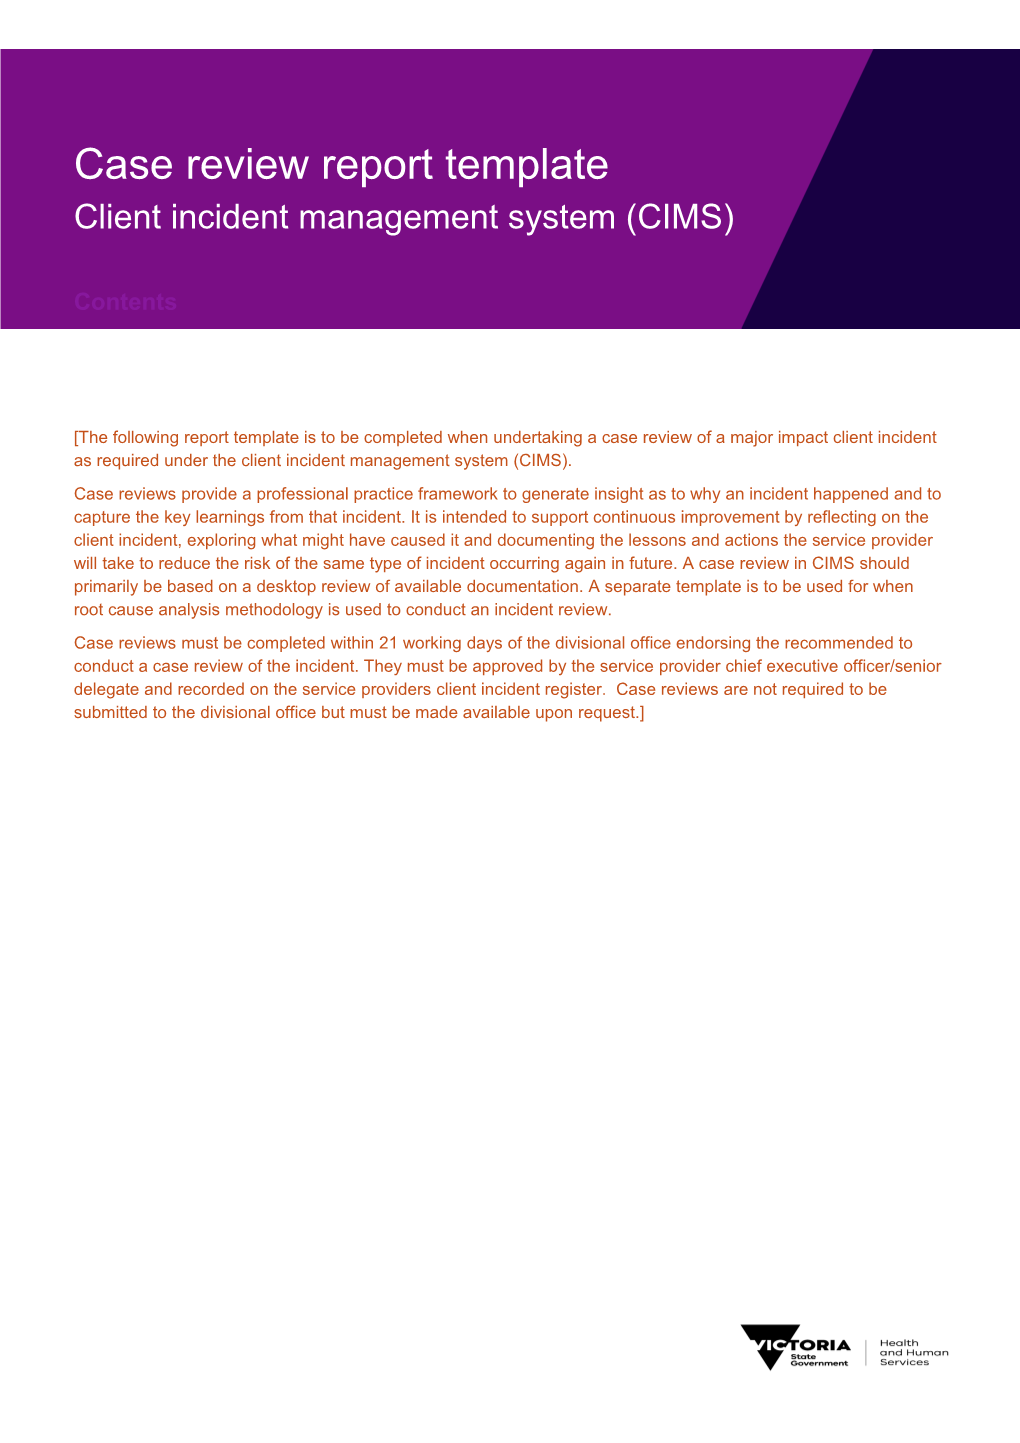 Client Incident Management System (CIMS) Case Review Report Template